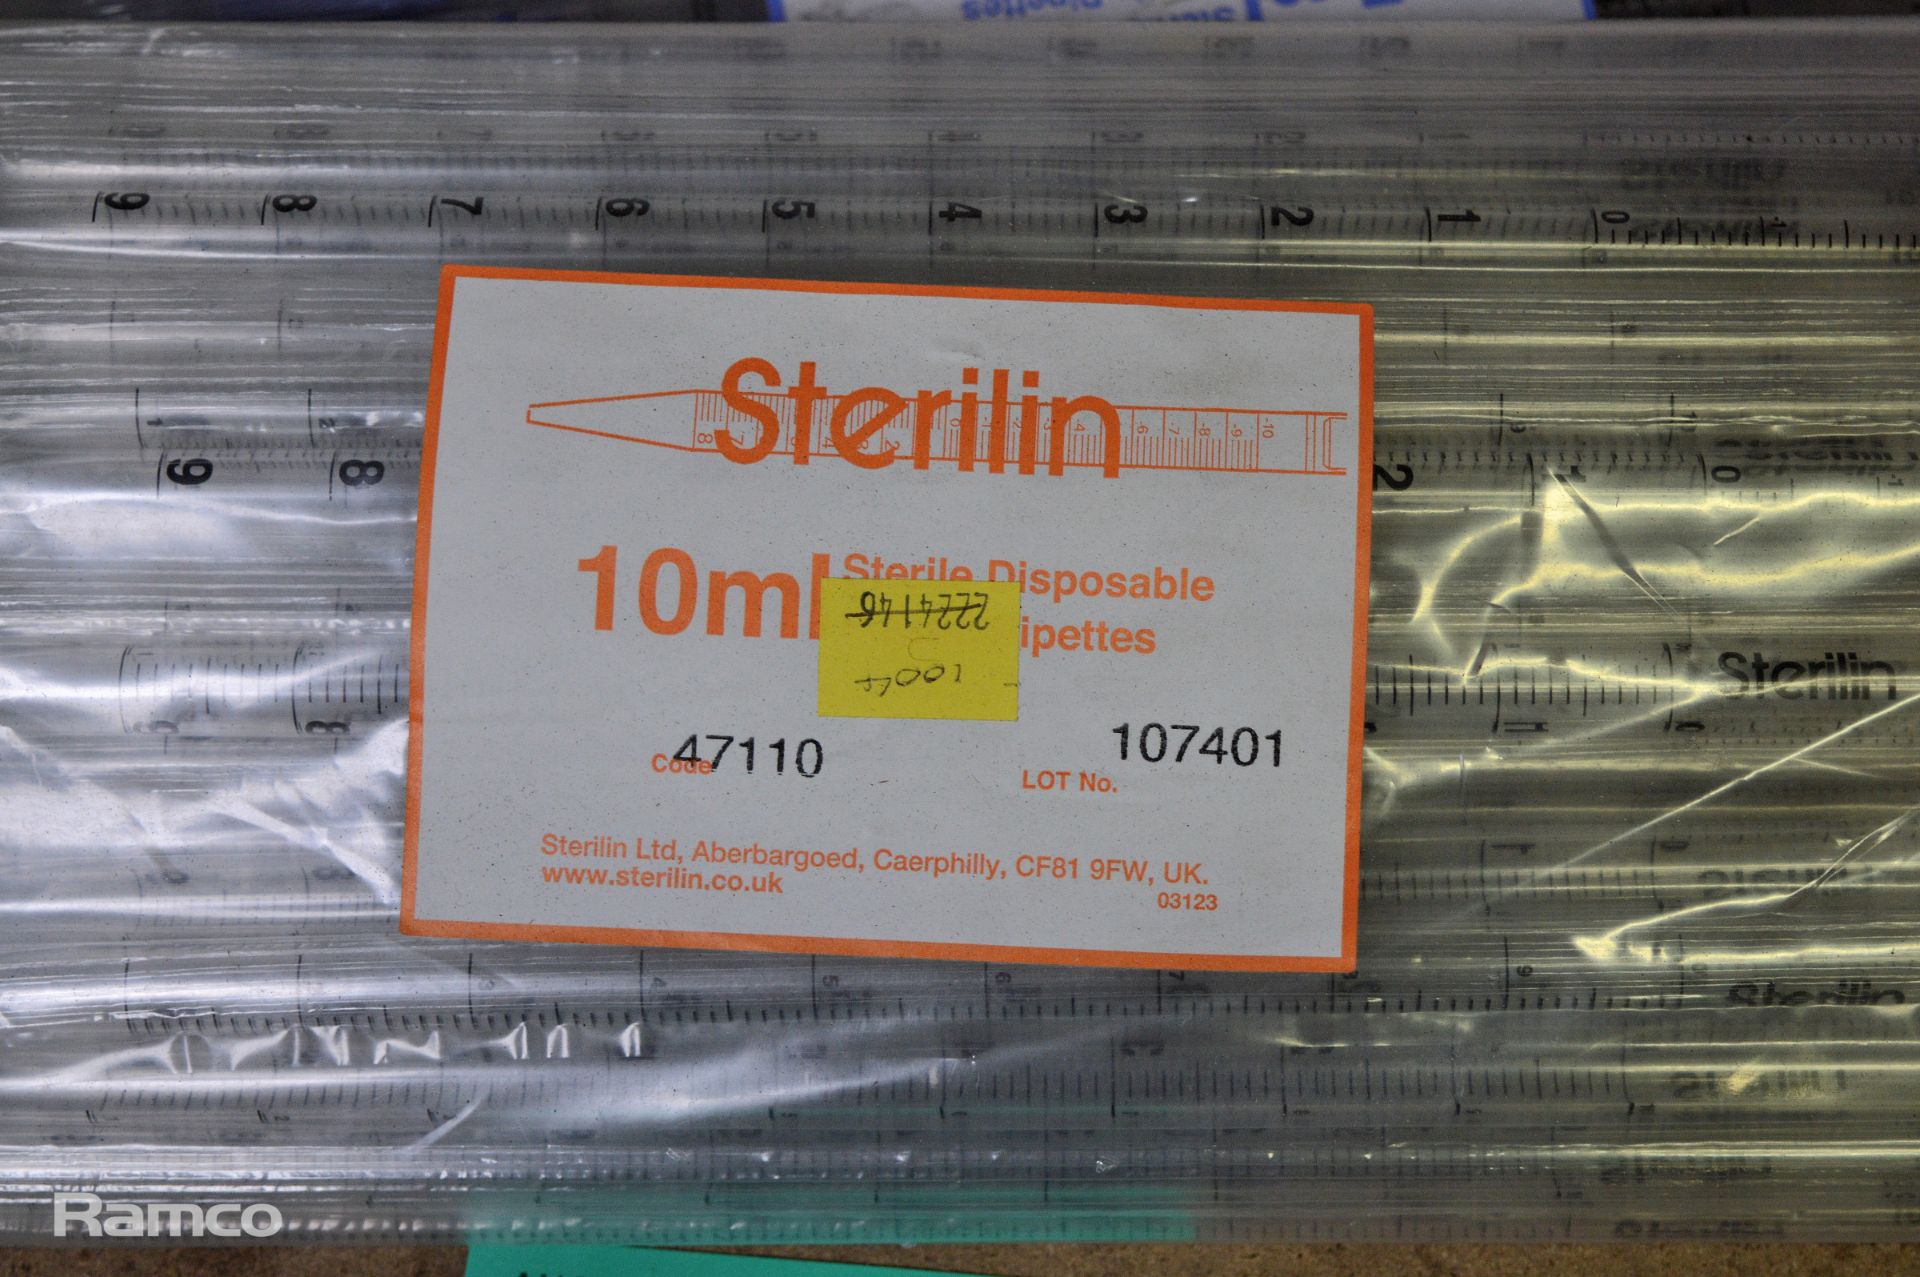 Sterilin Sterile Disposable Plastic Pipettes - 1x 5ml bag & 1x 10ml bag - Image 2 of 2